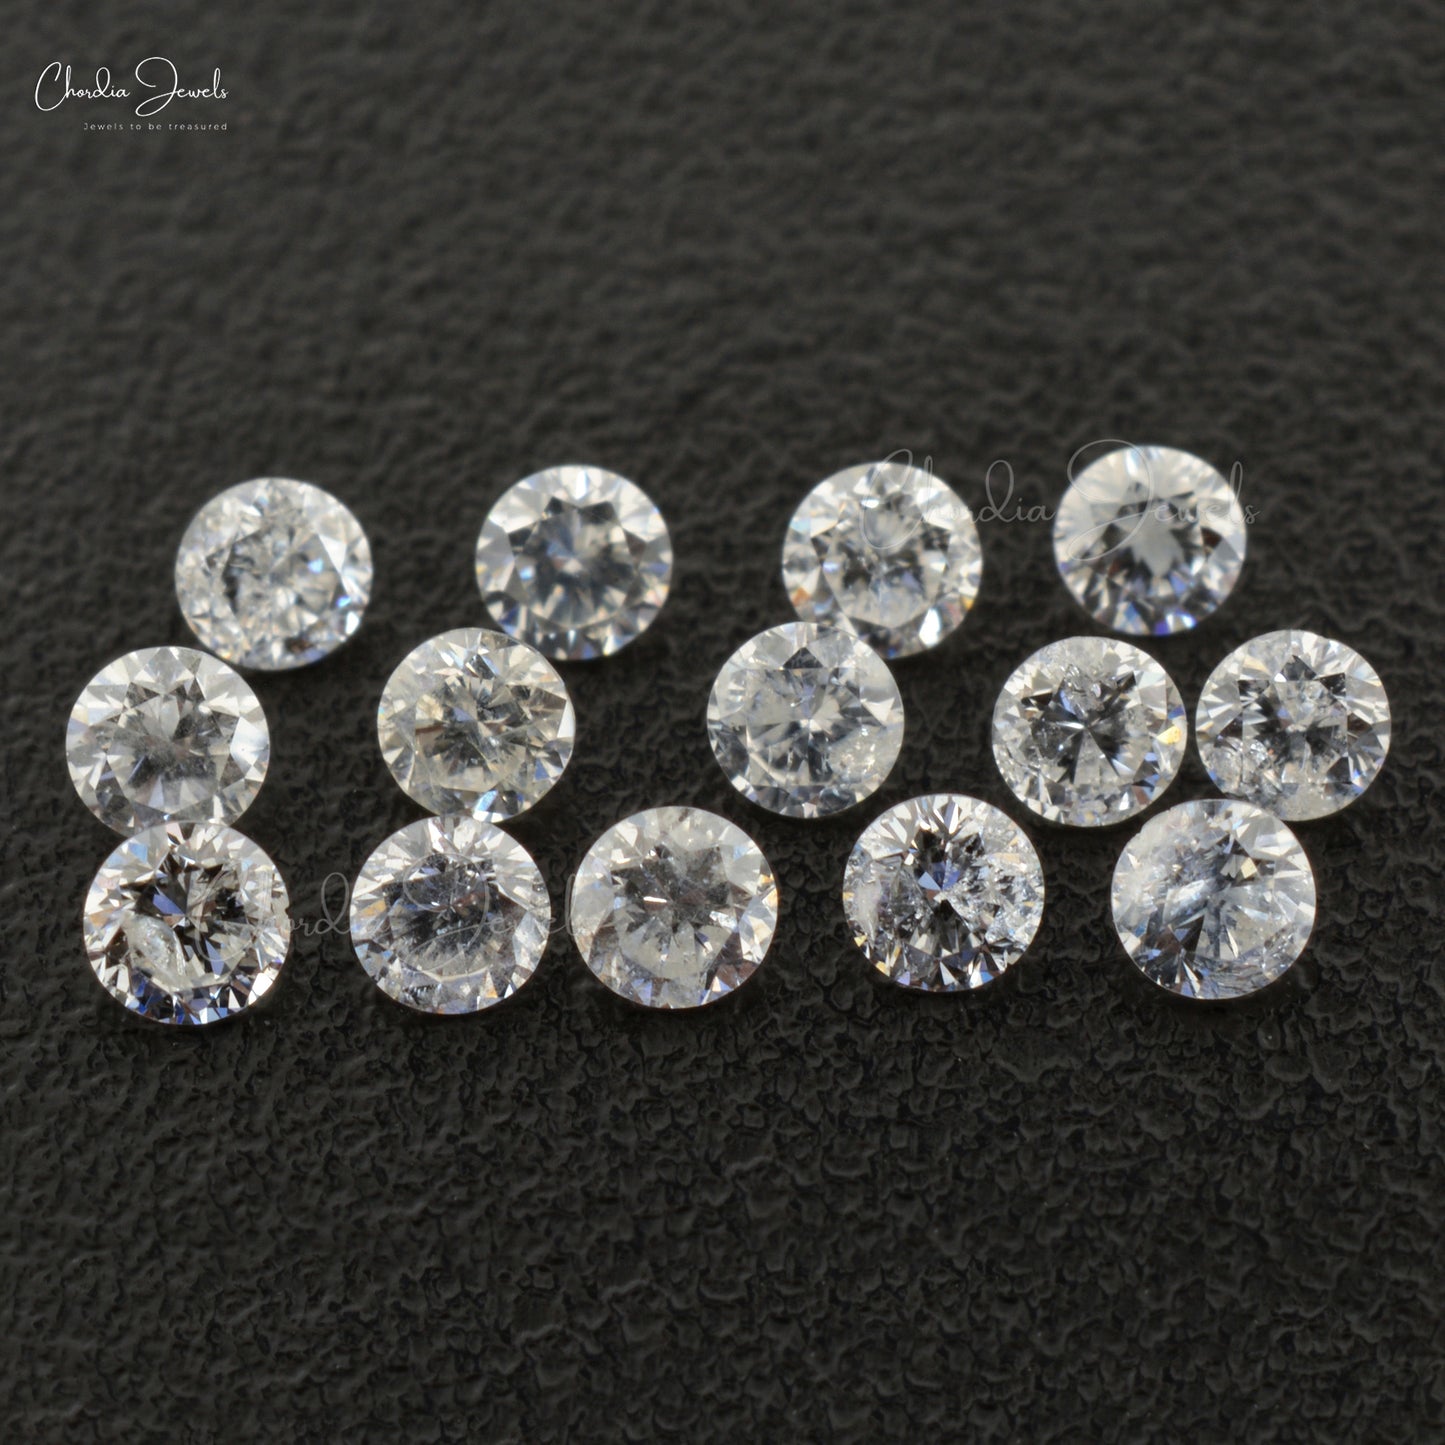 White Diamond I1-I2 / G-H Round Brilliant Cut 1.3MM Precious Gemstone, 1 Piece